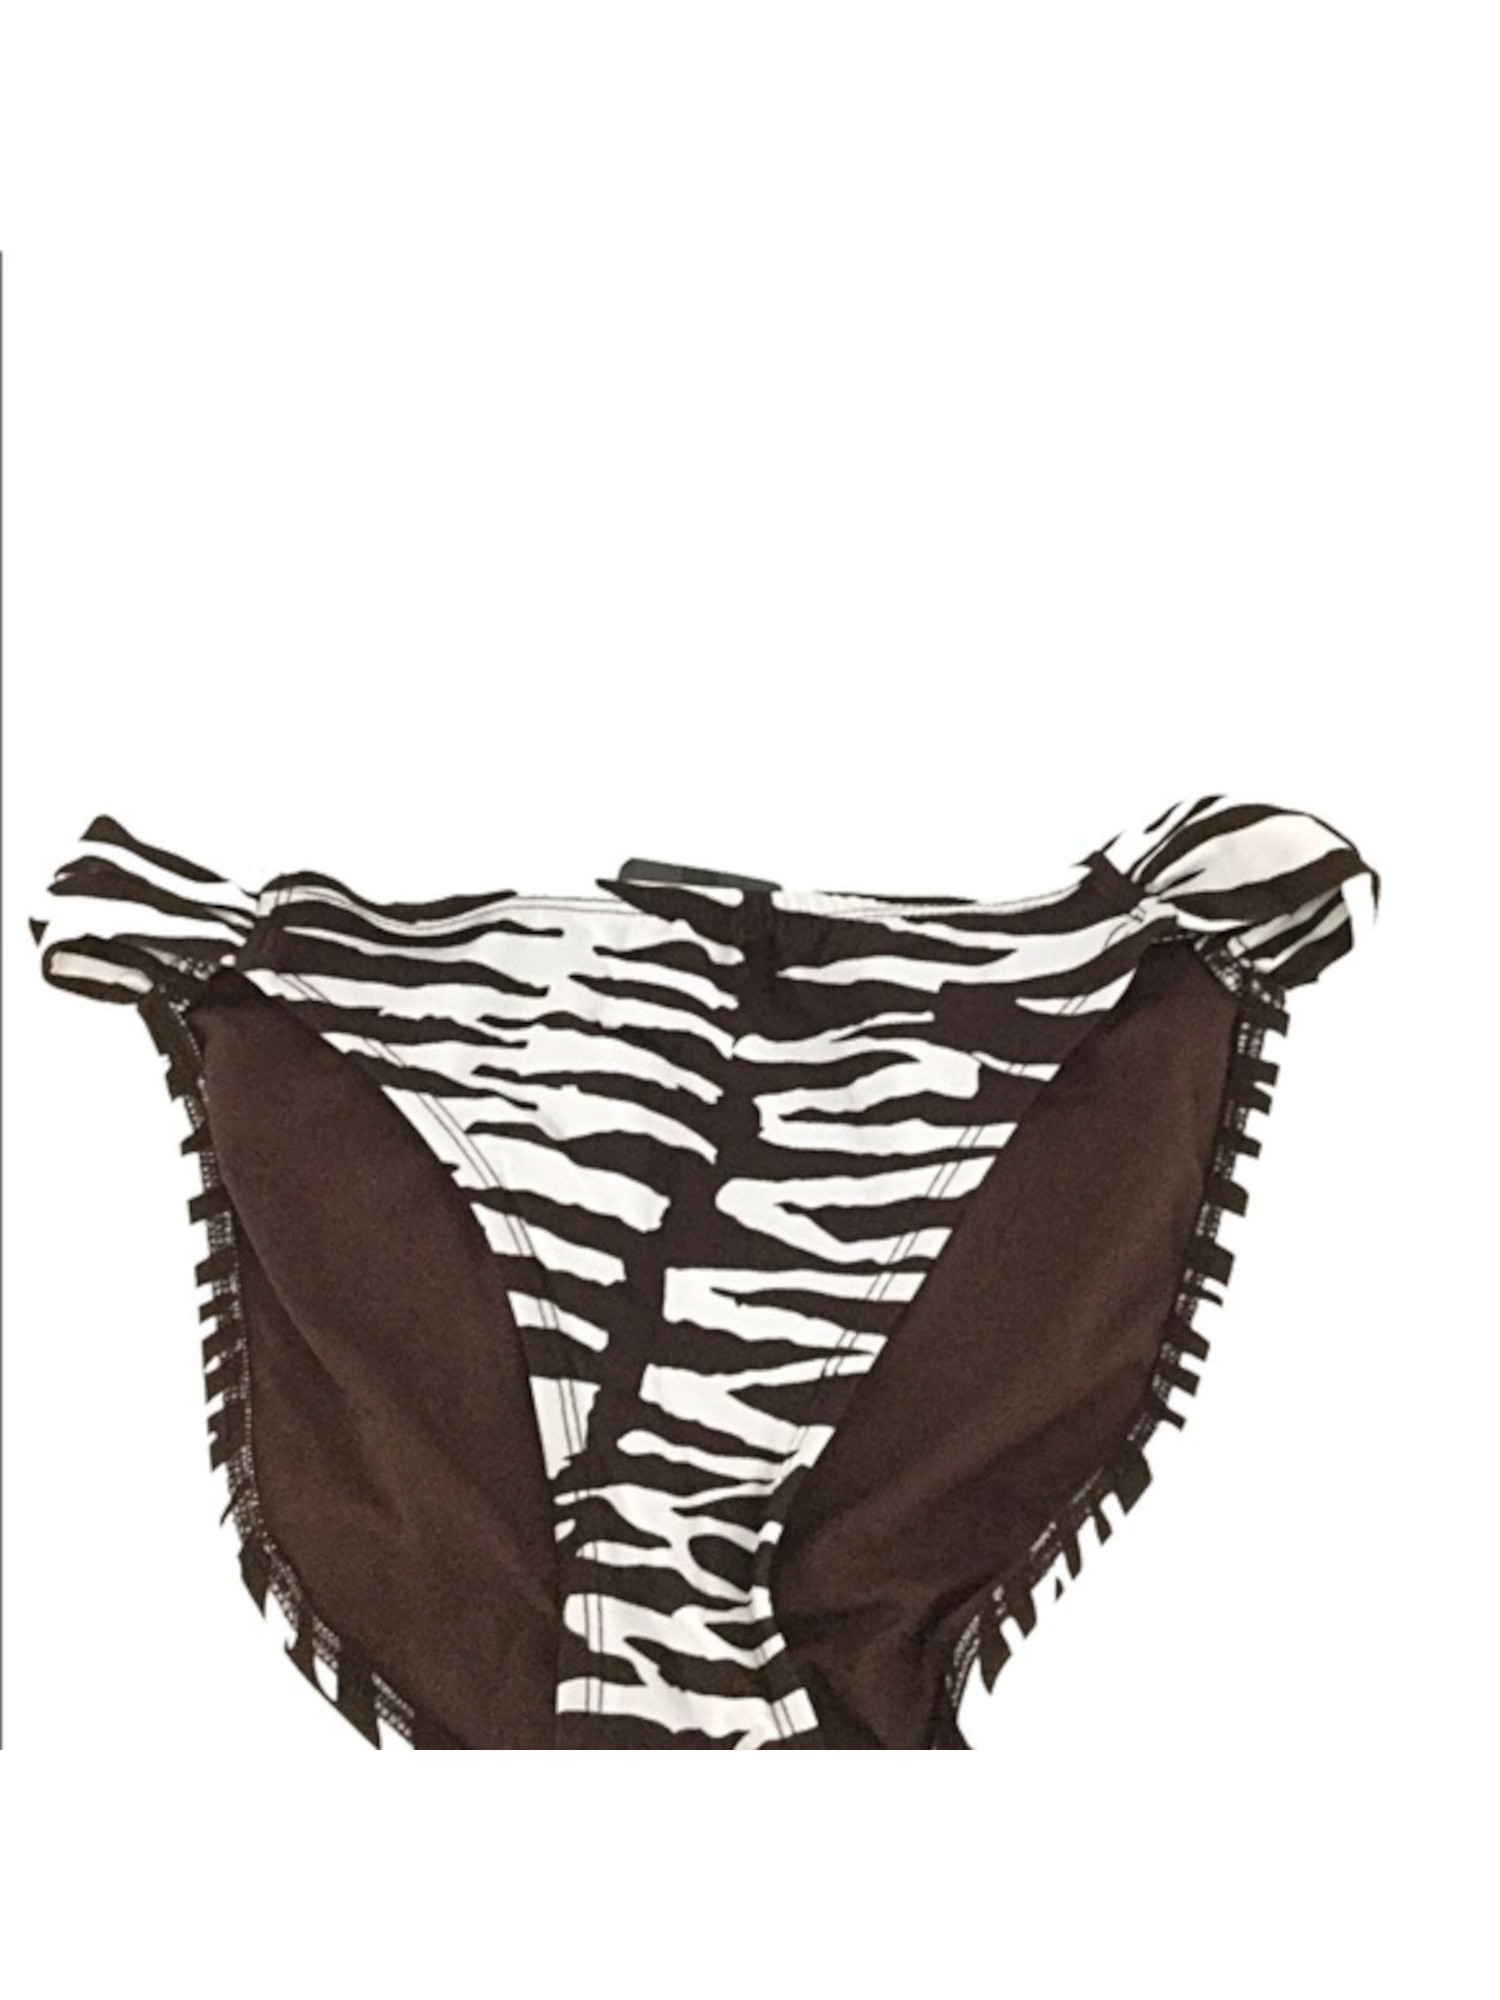 MOSSIMO SUPPLY CO. Women's Brown Printed Shirred Bikini Swimwear Bottom L